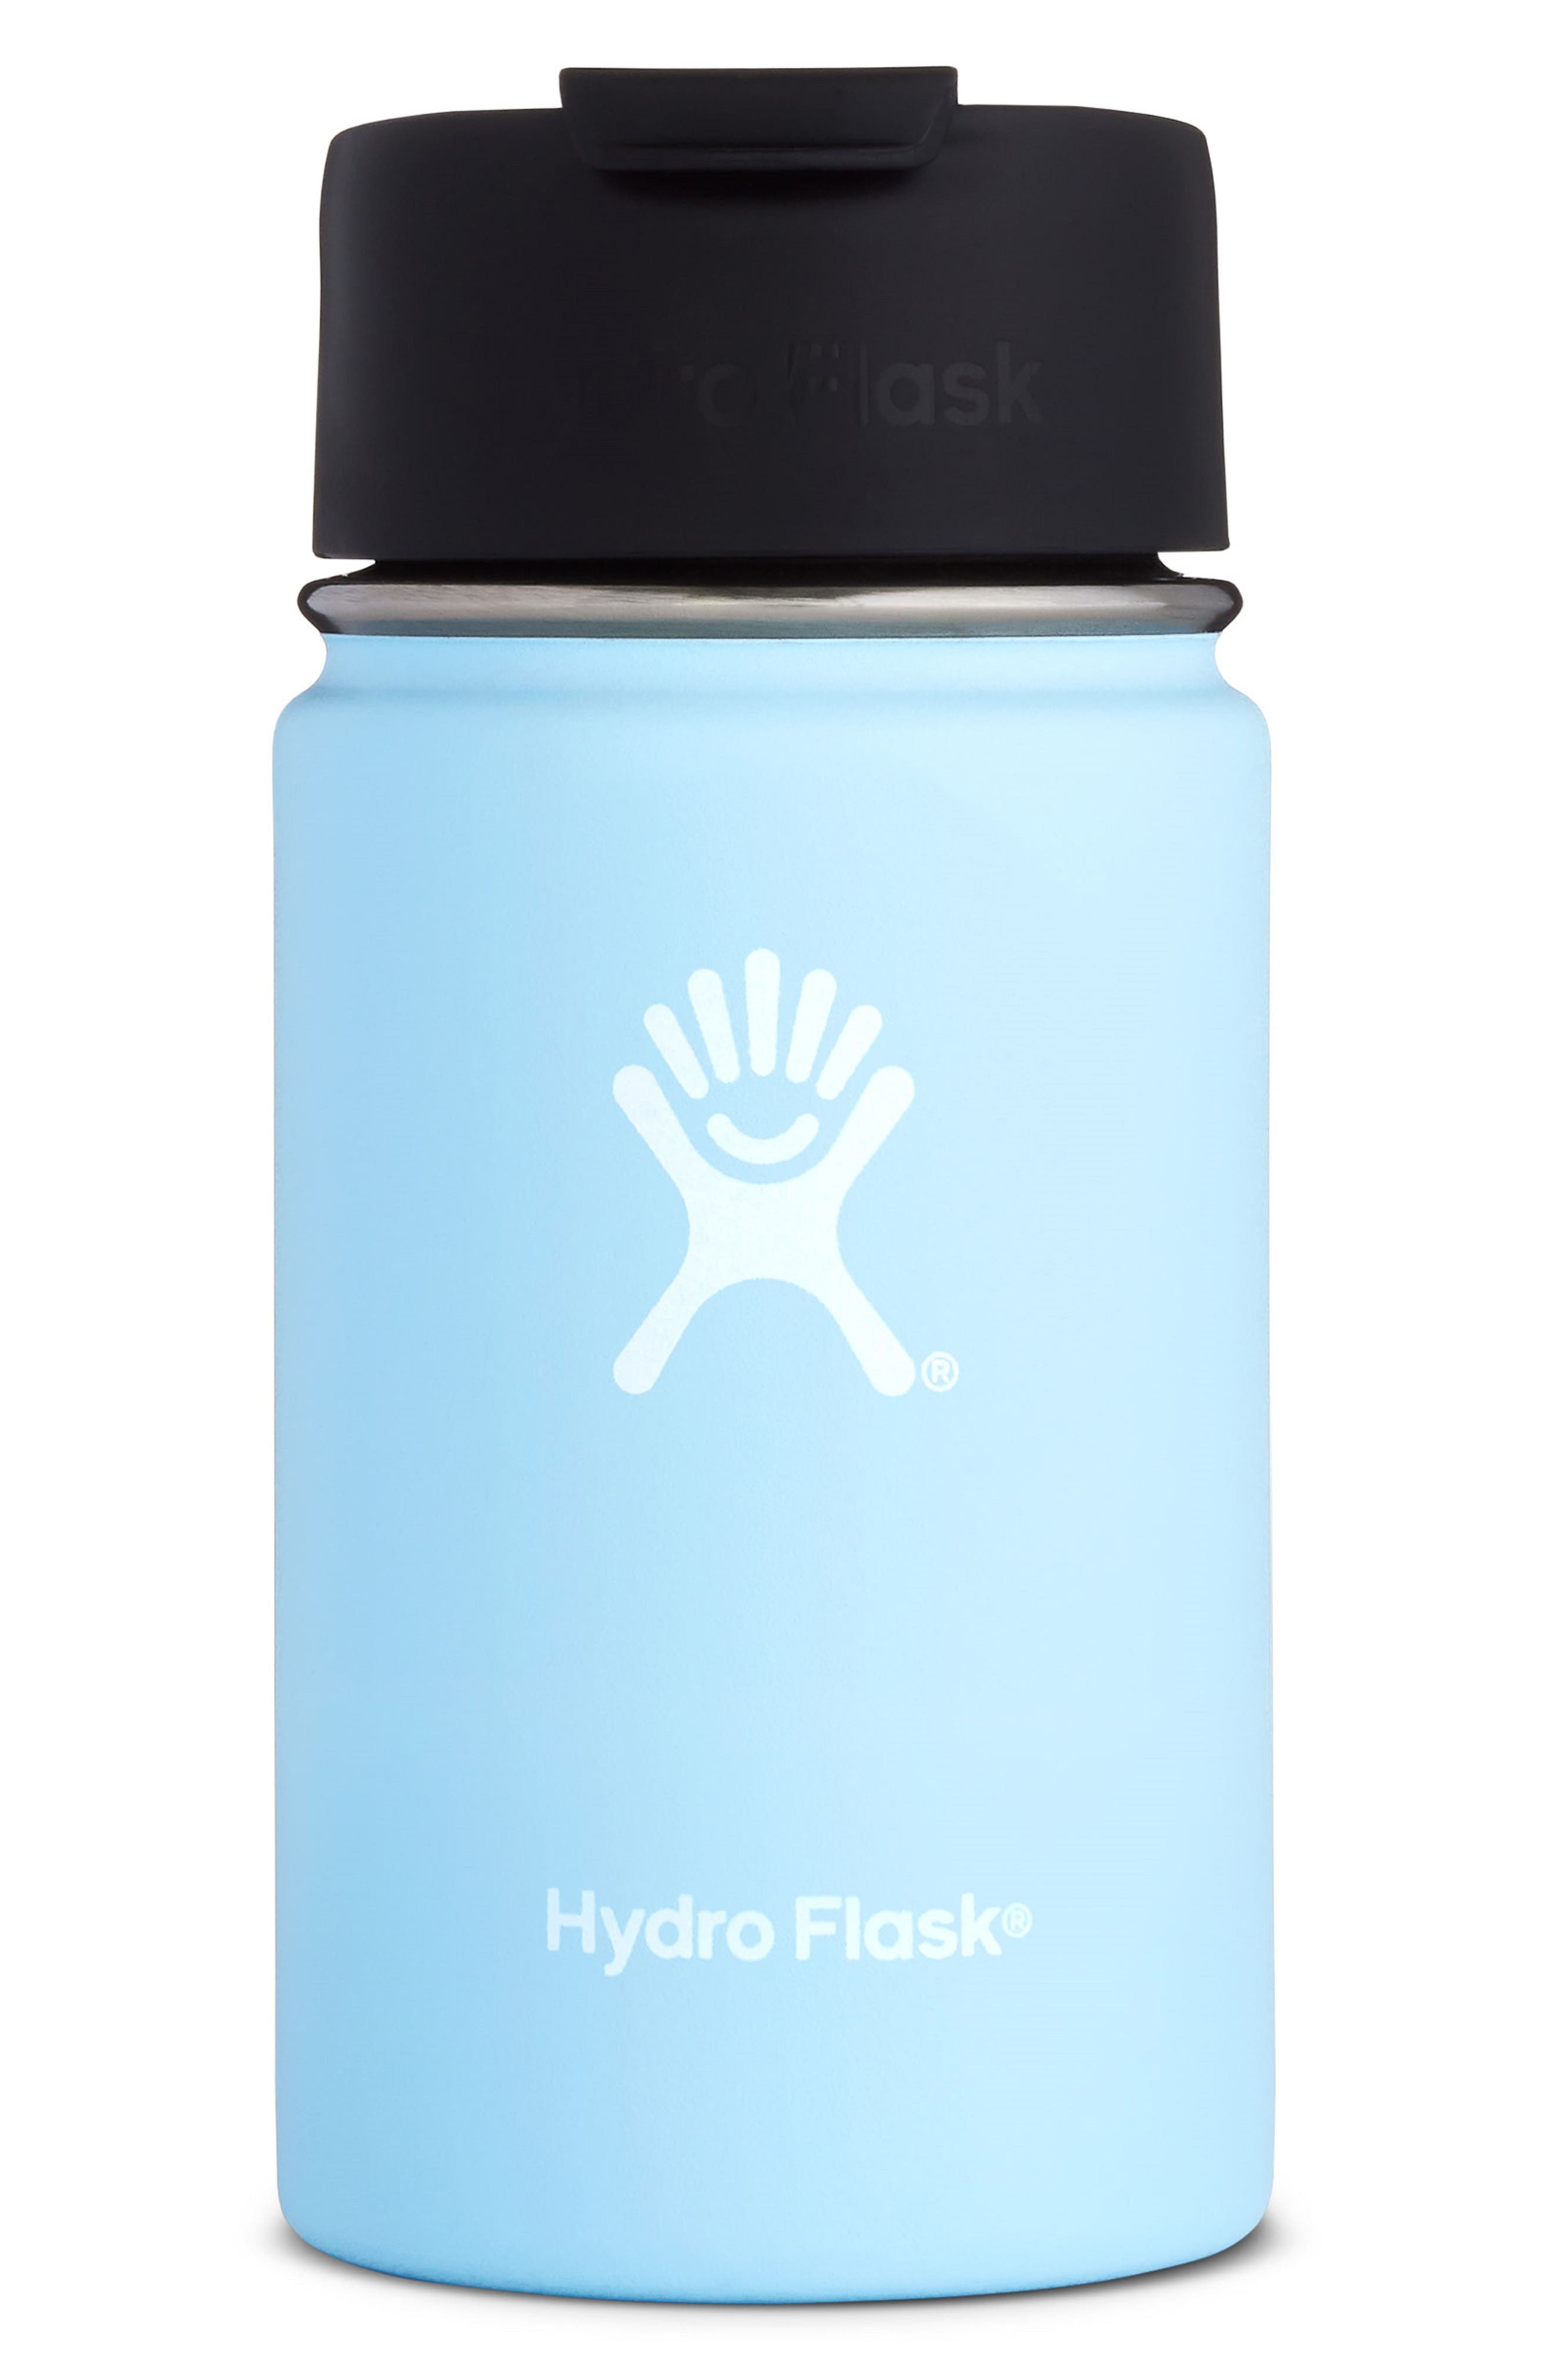 12 ounce hydro flask